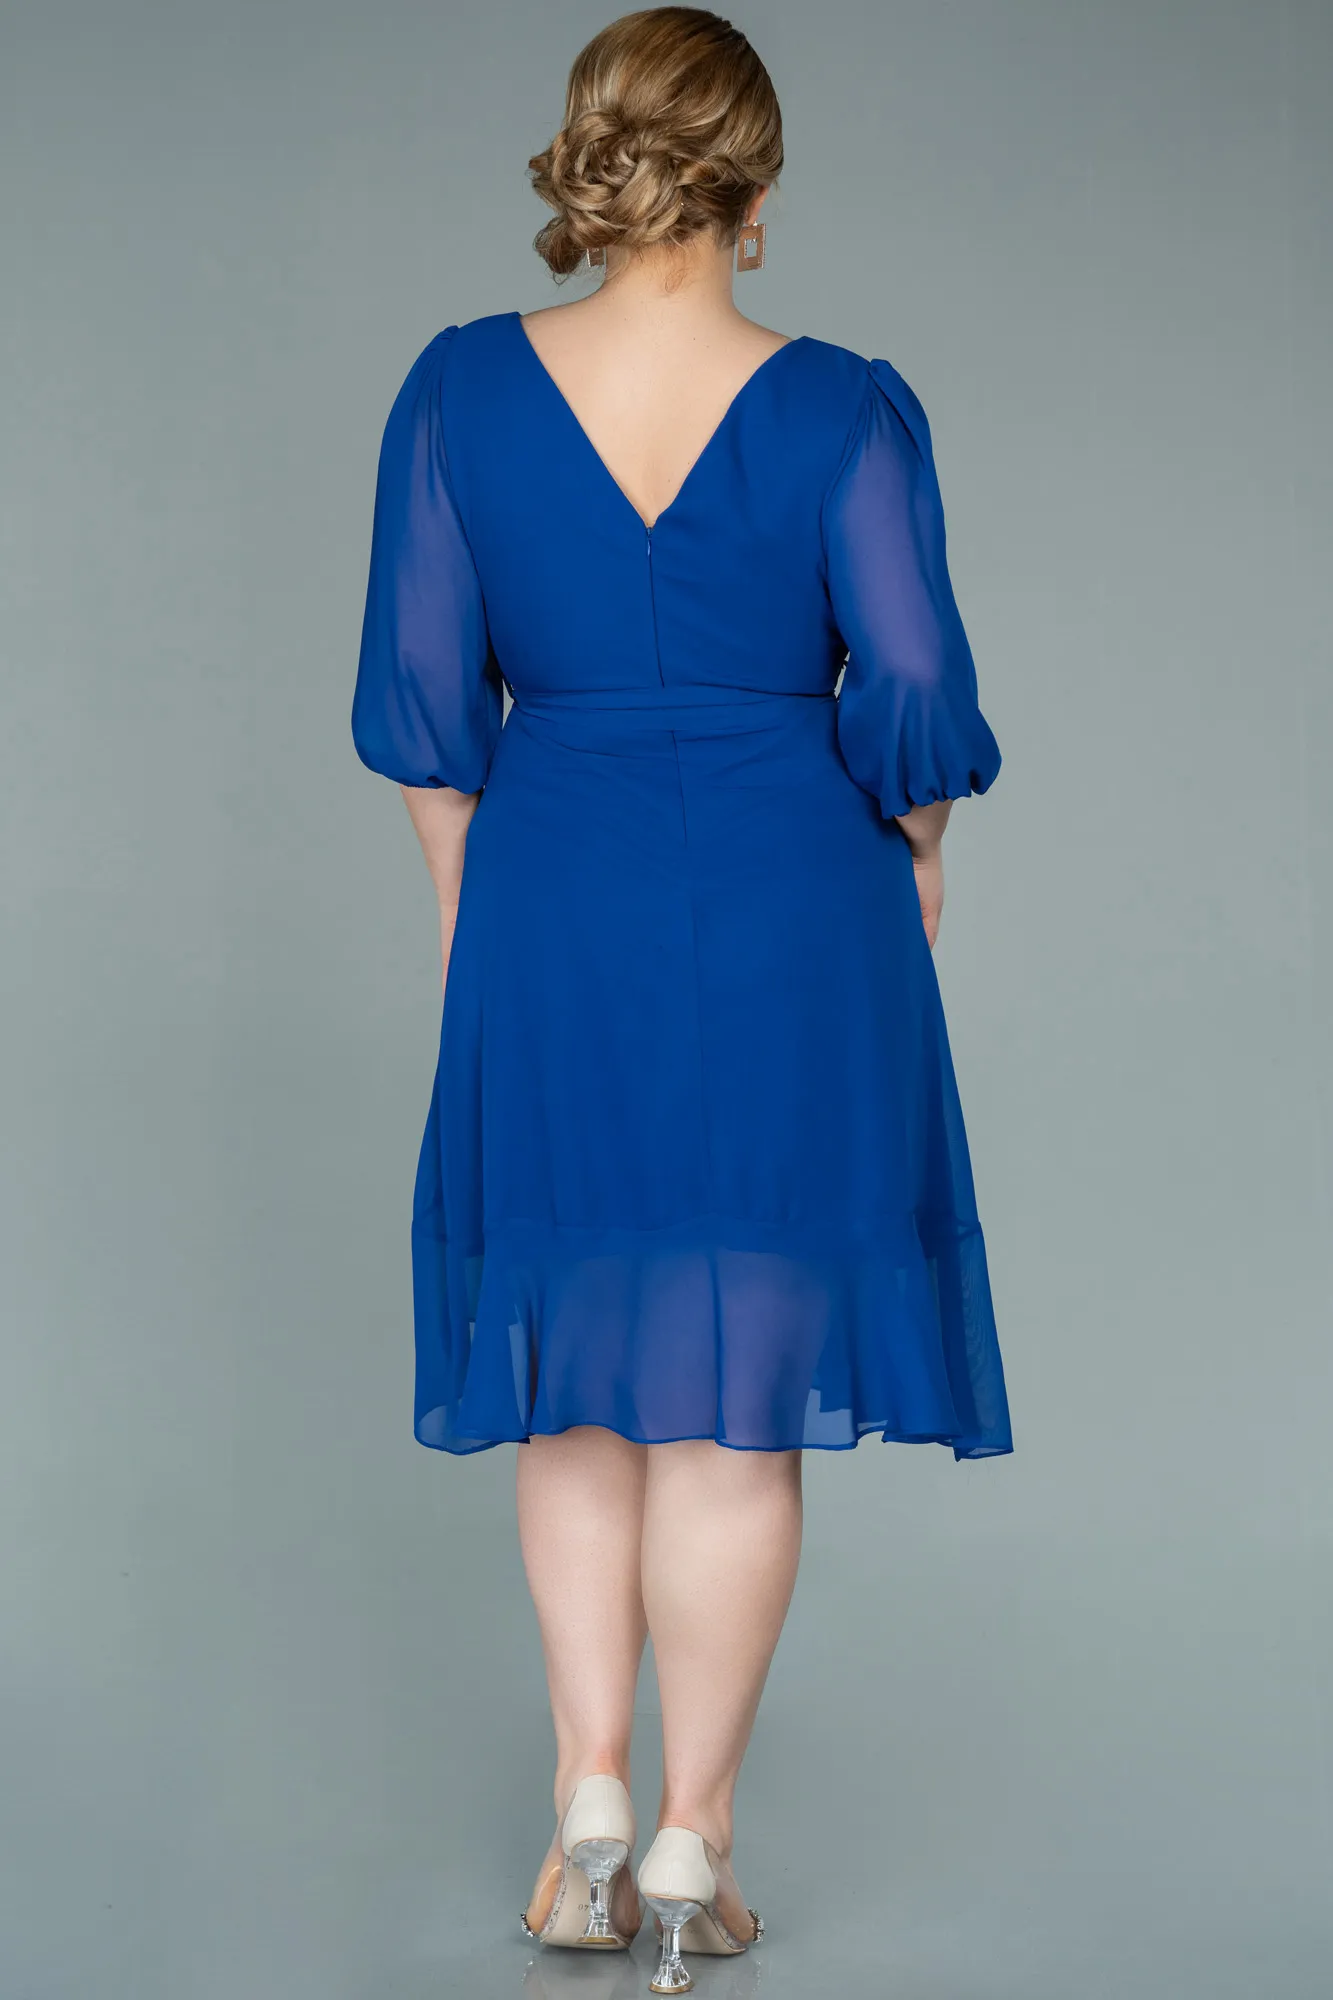 Sax Blue-Short Chiffon Oversized Evening Dress ABK1340